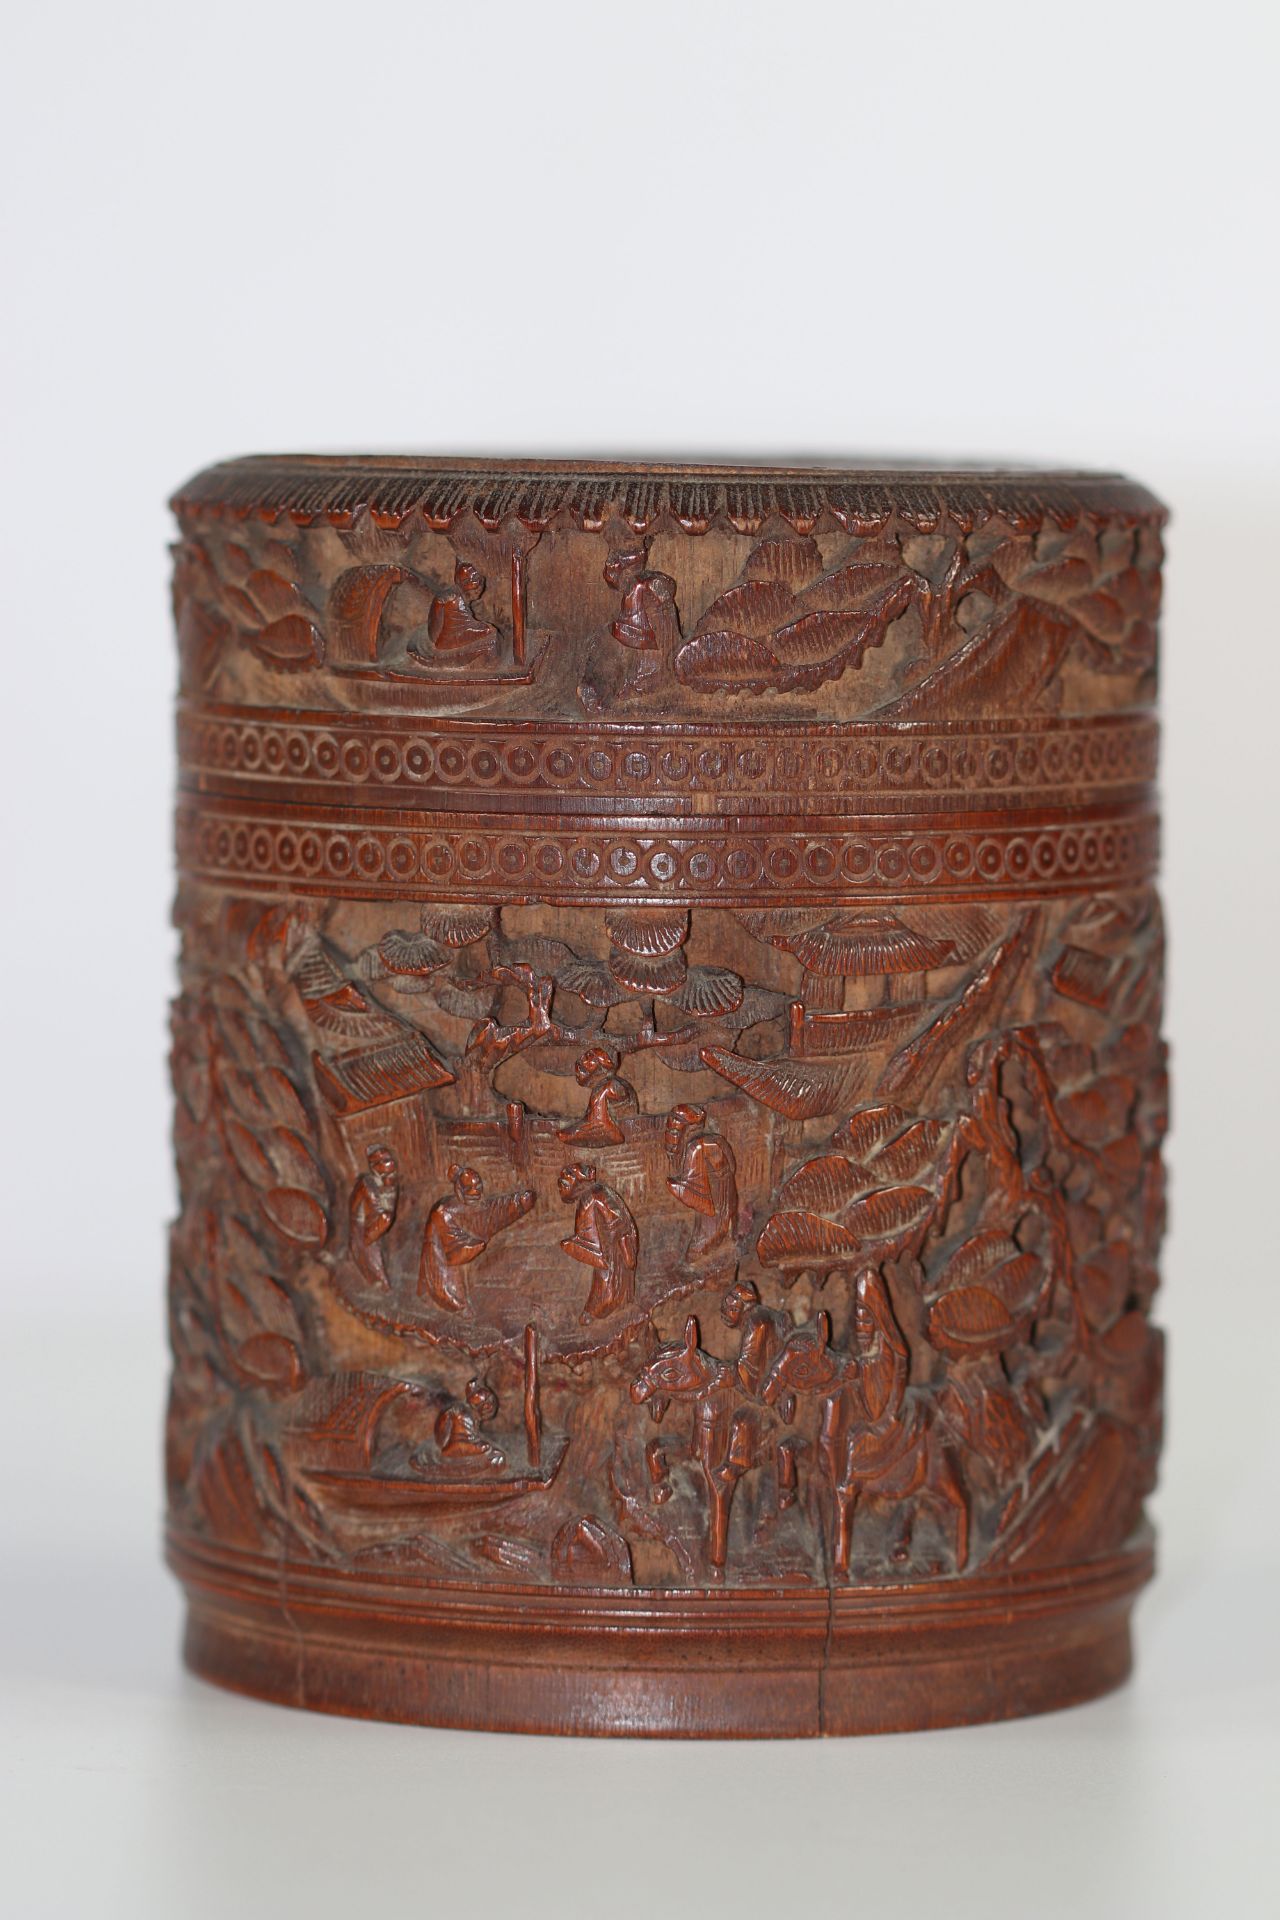 bamboo box the lid with jade inlay.China late nineteenth.